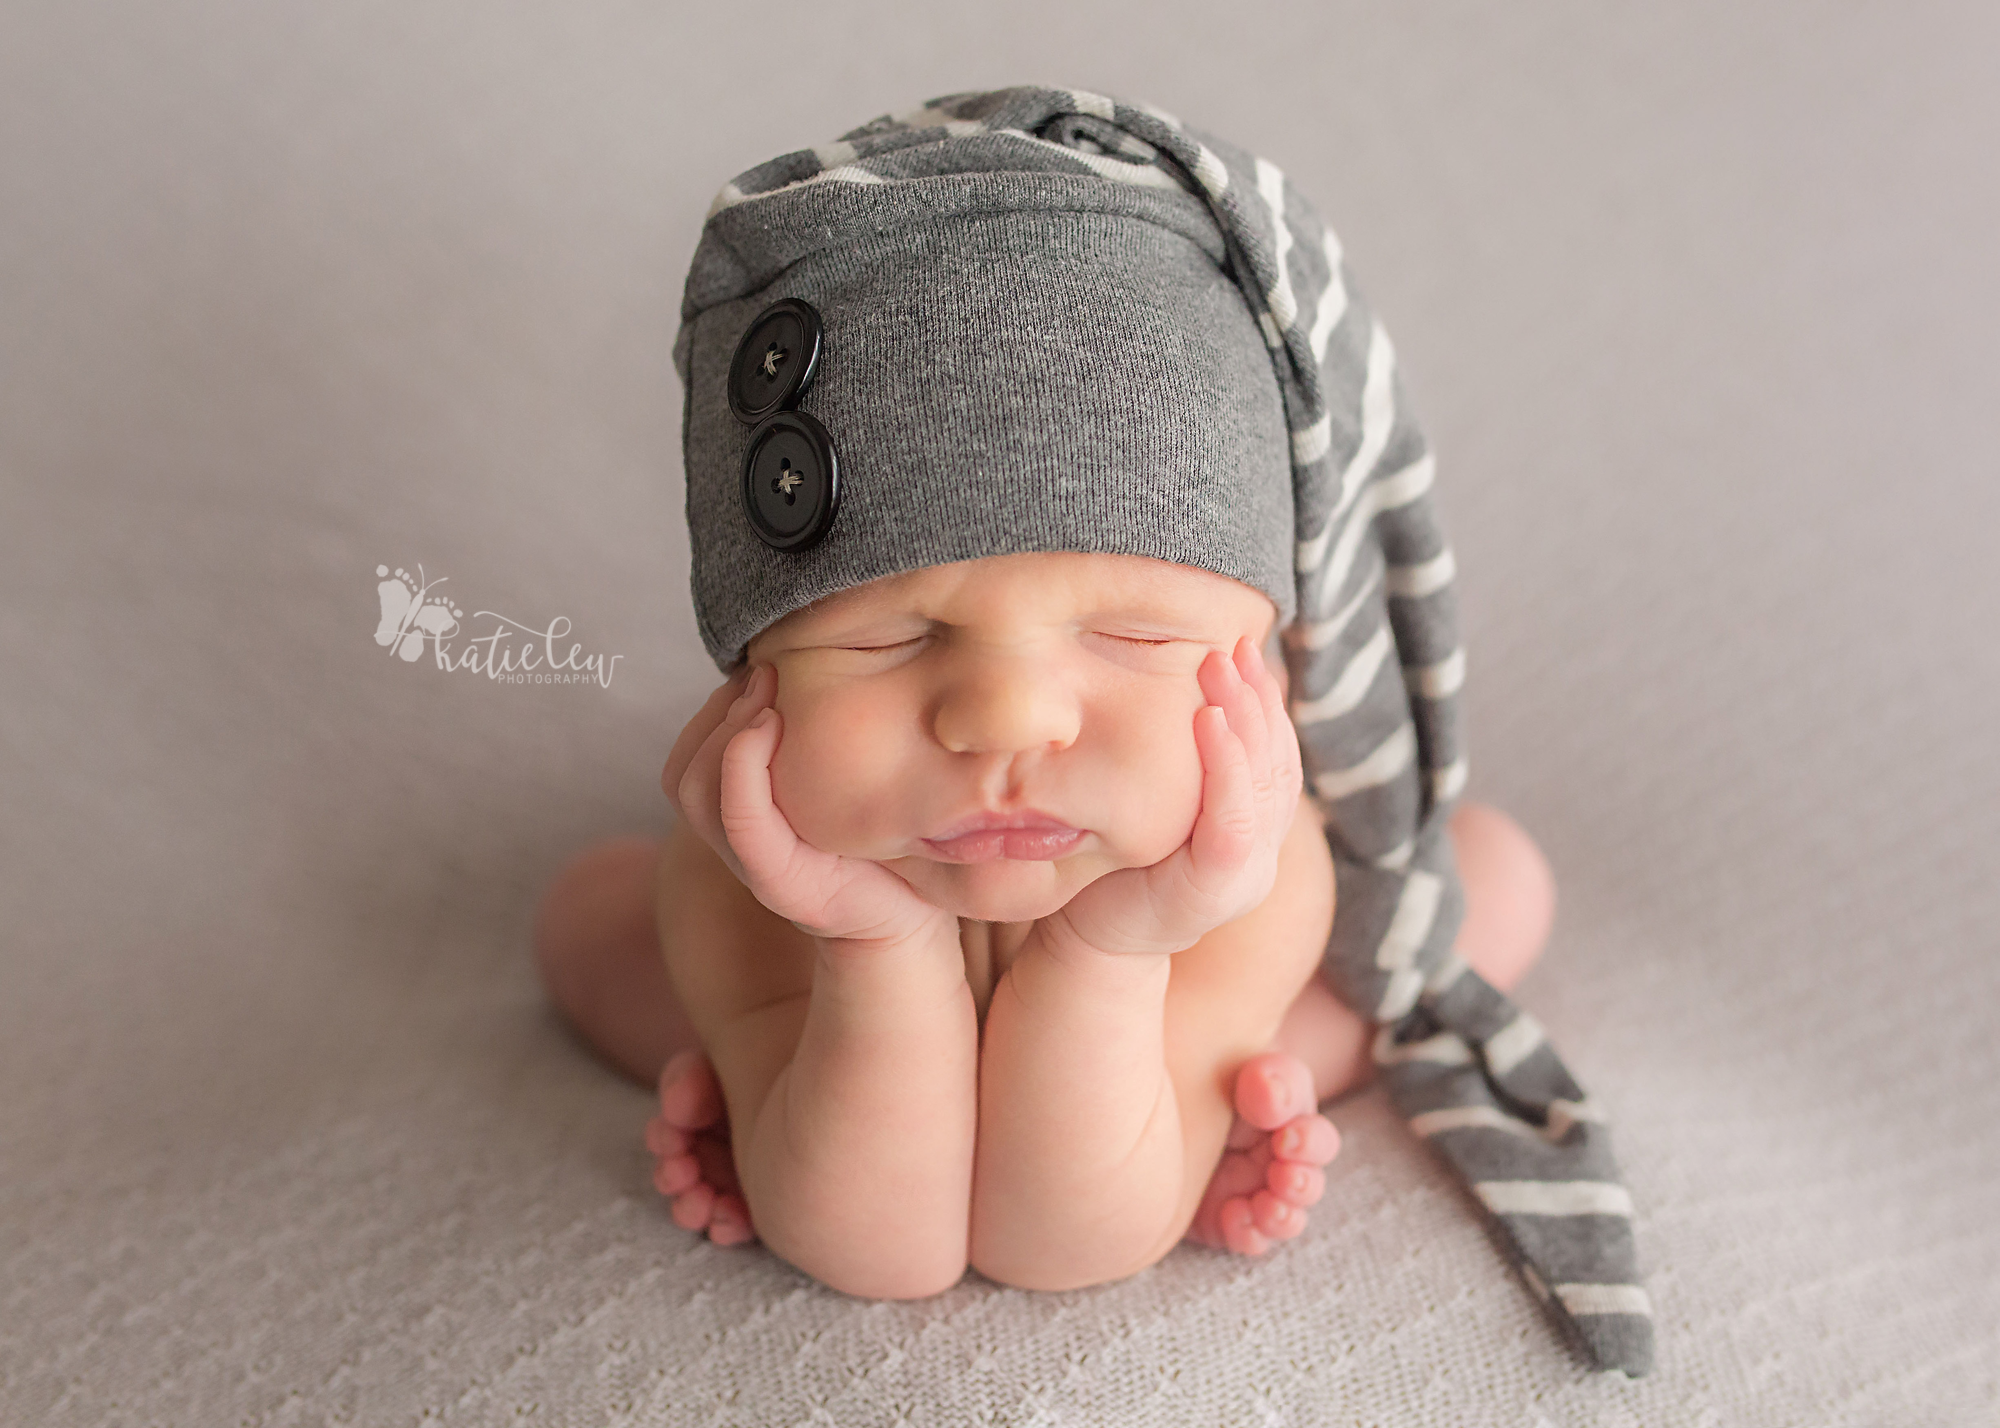 newborn baby boy wearing a striped hat